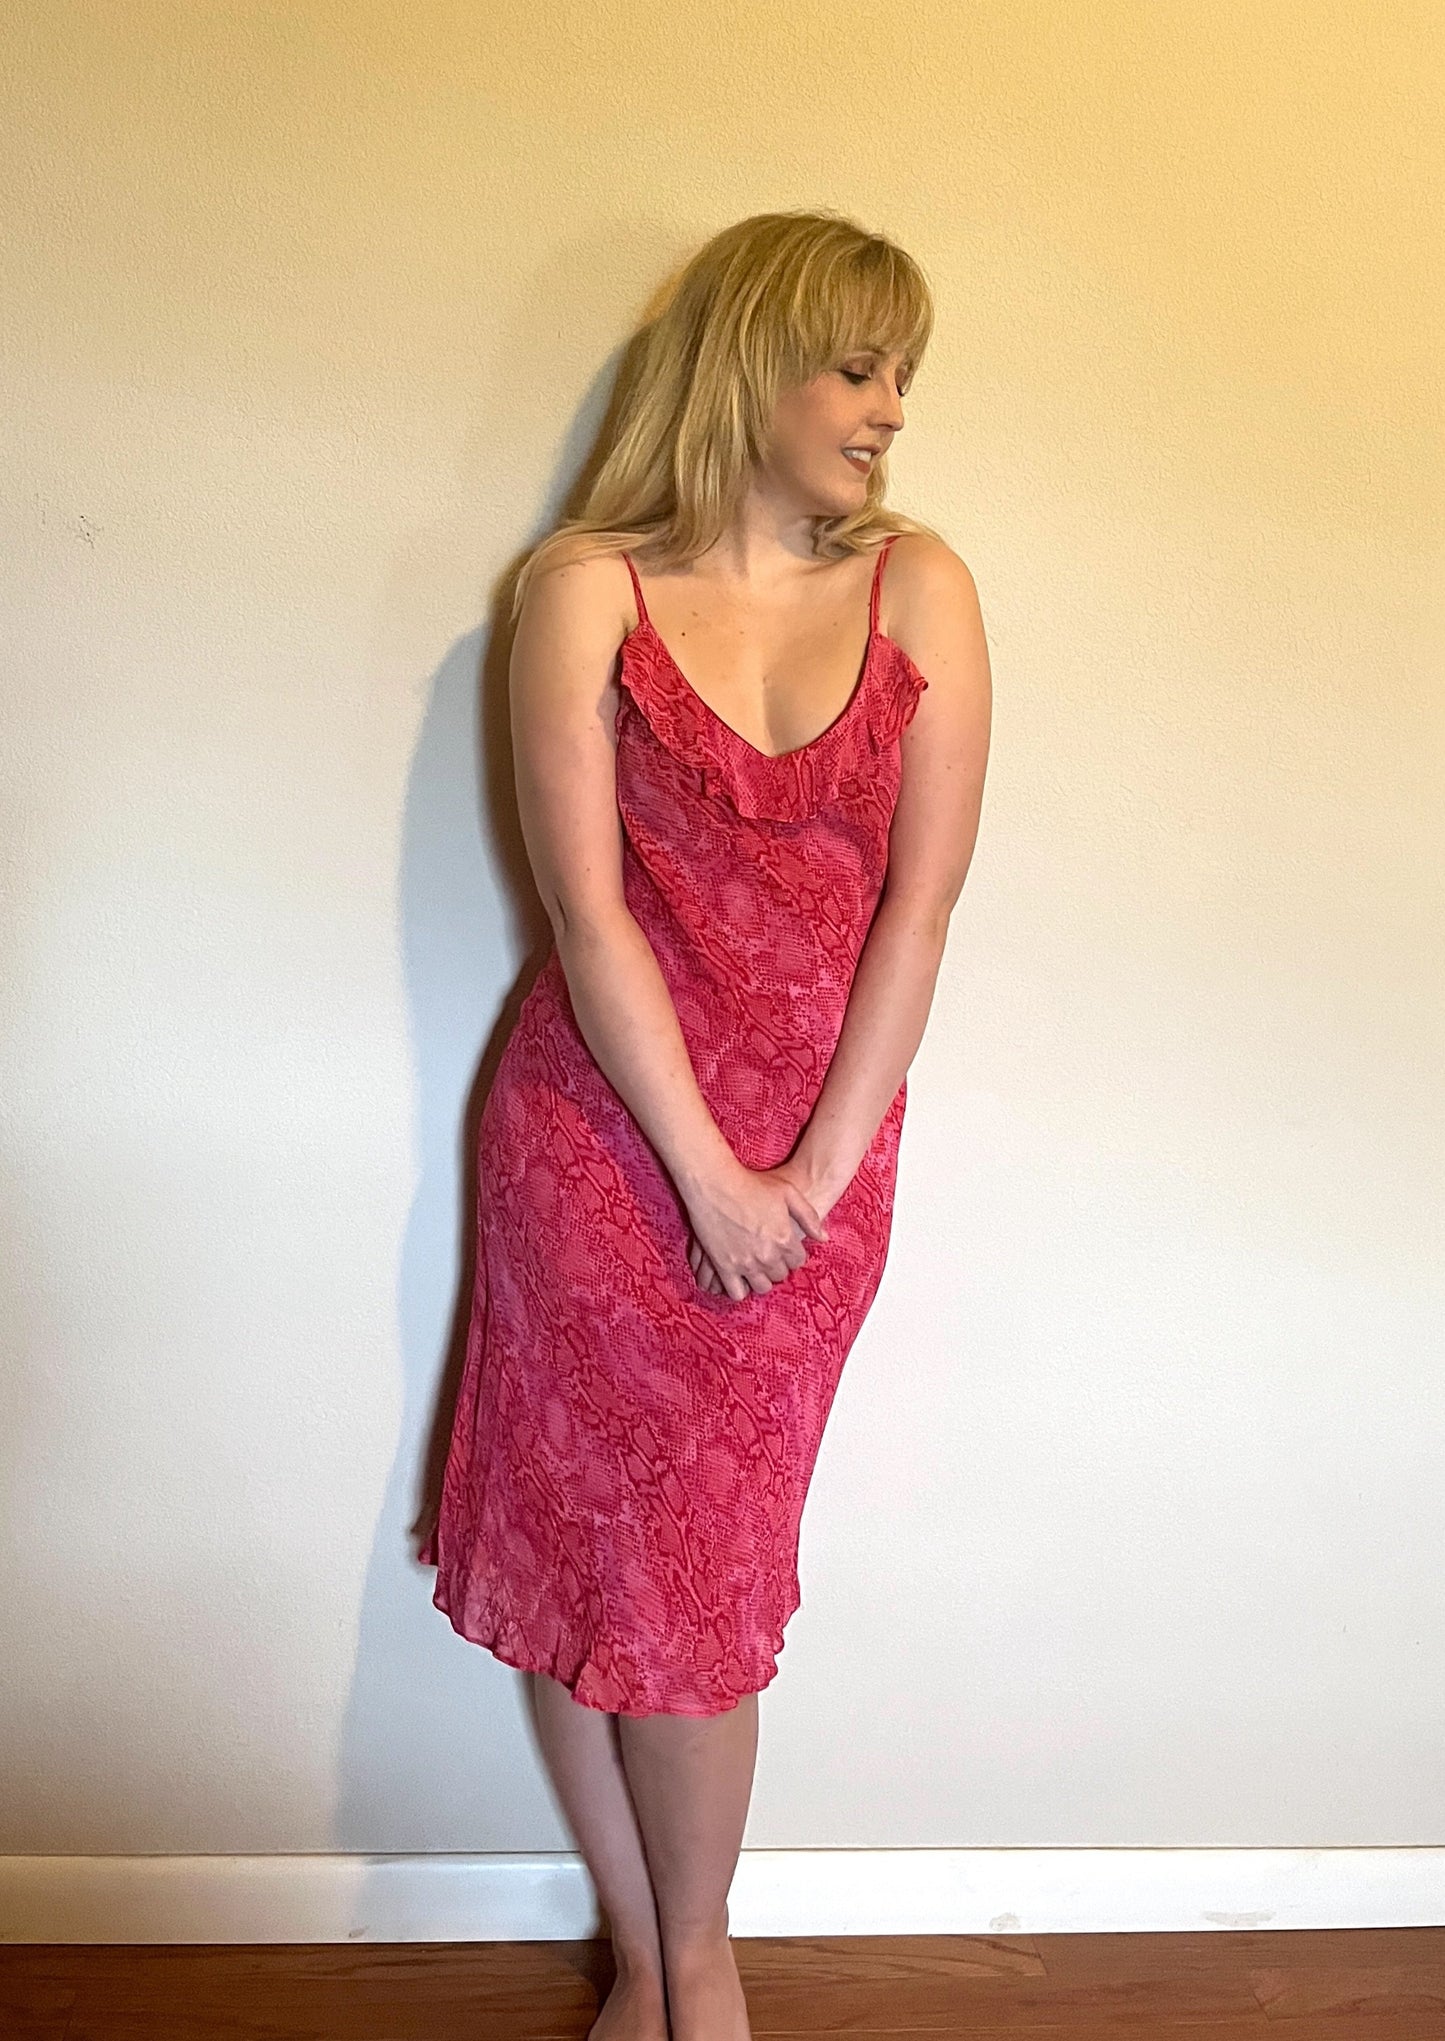 Vintage 1990's "Betsey Johnson" Hot Pink Snake-Print Slip Dress